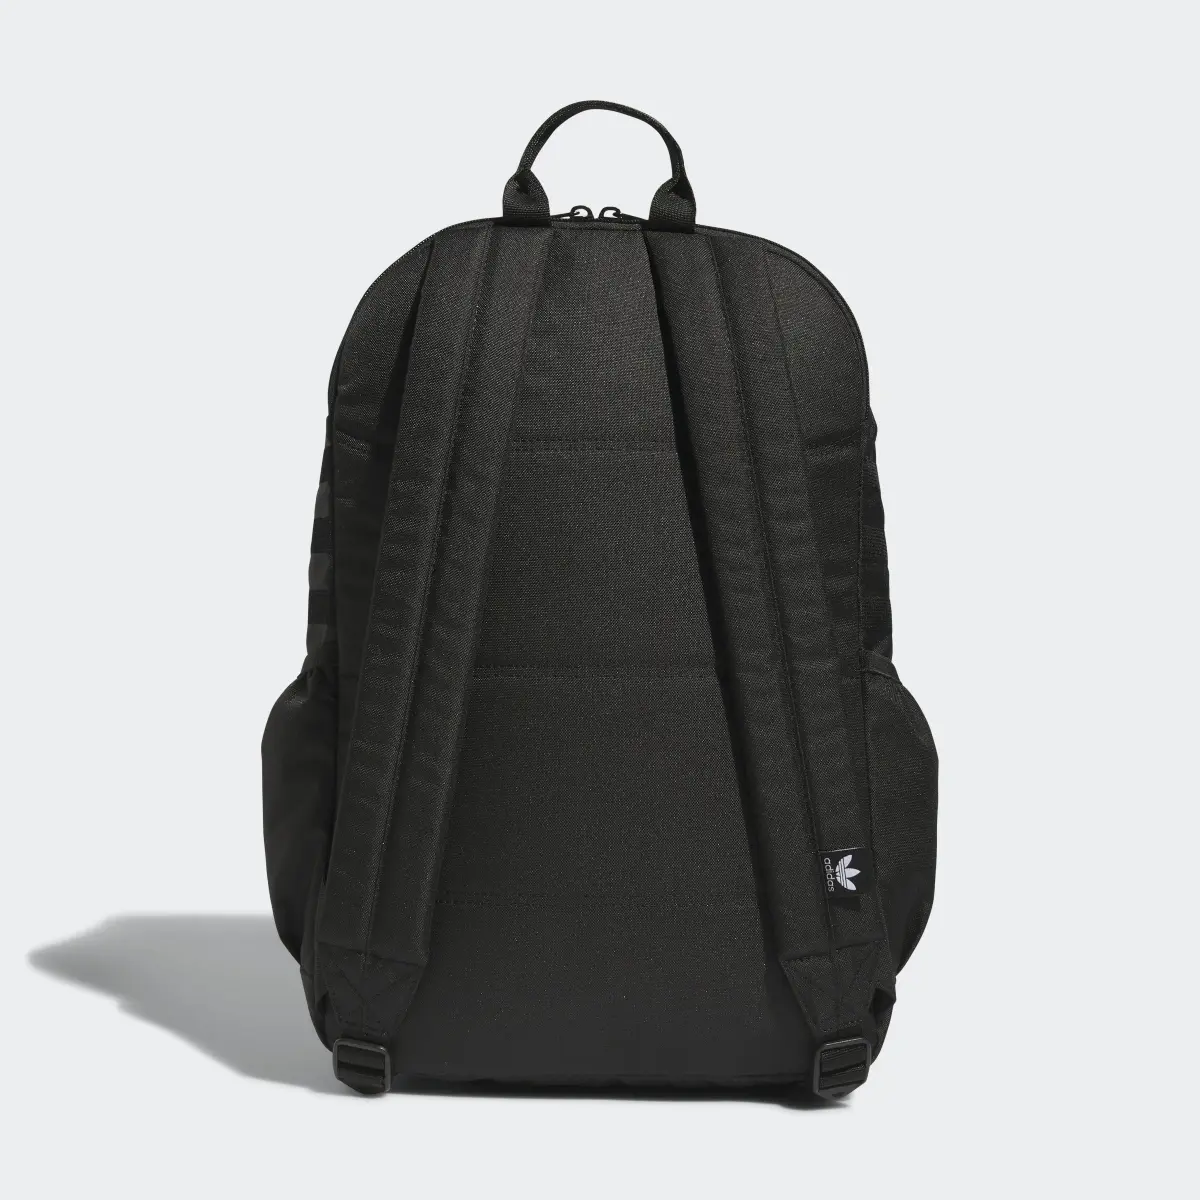 Adidas Originals National 3.0 Backpack. 3